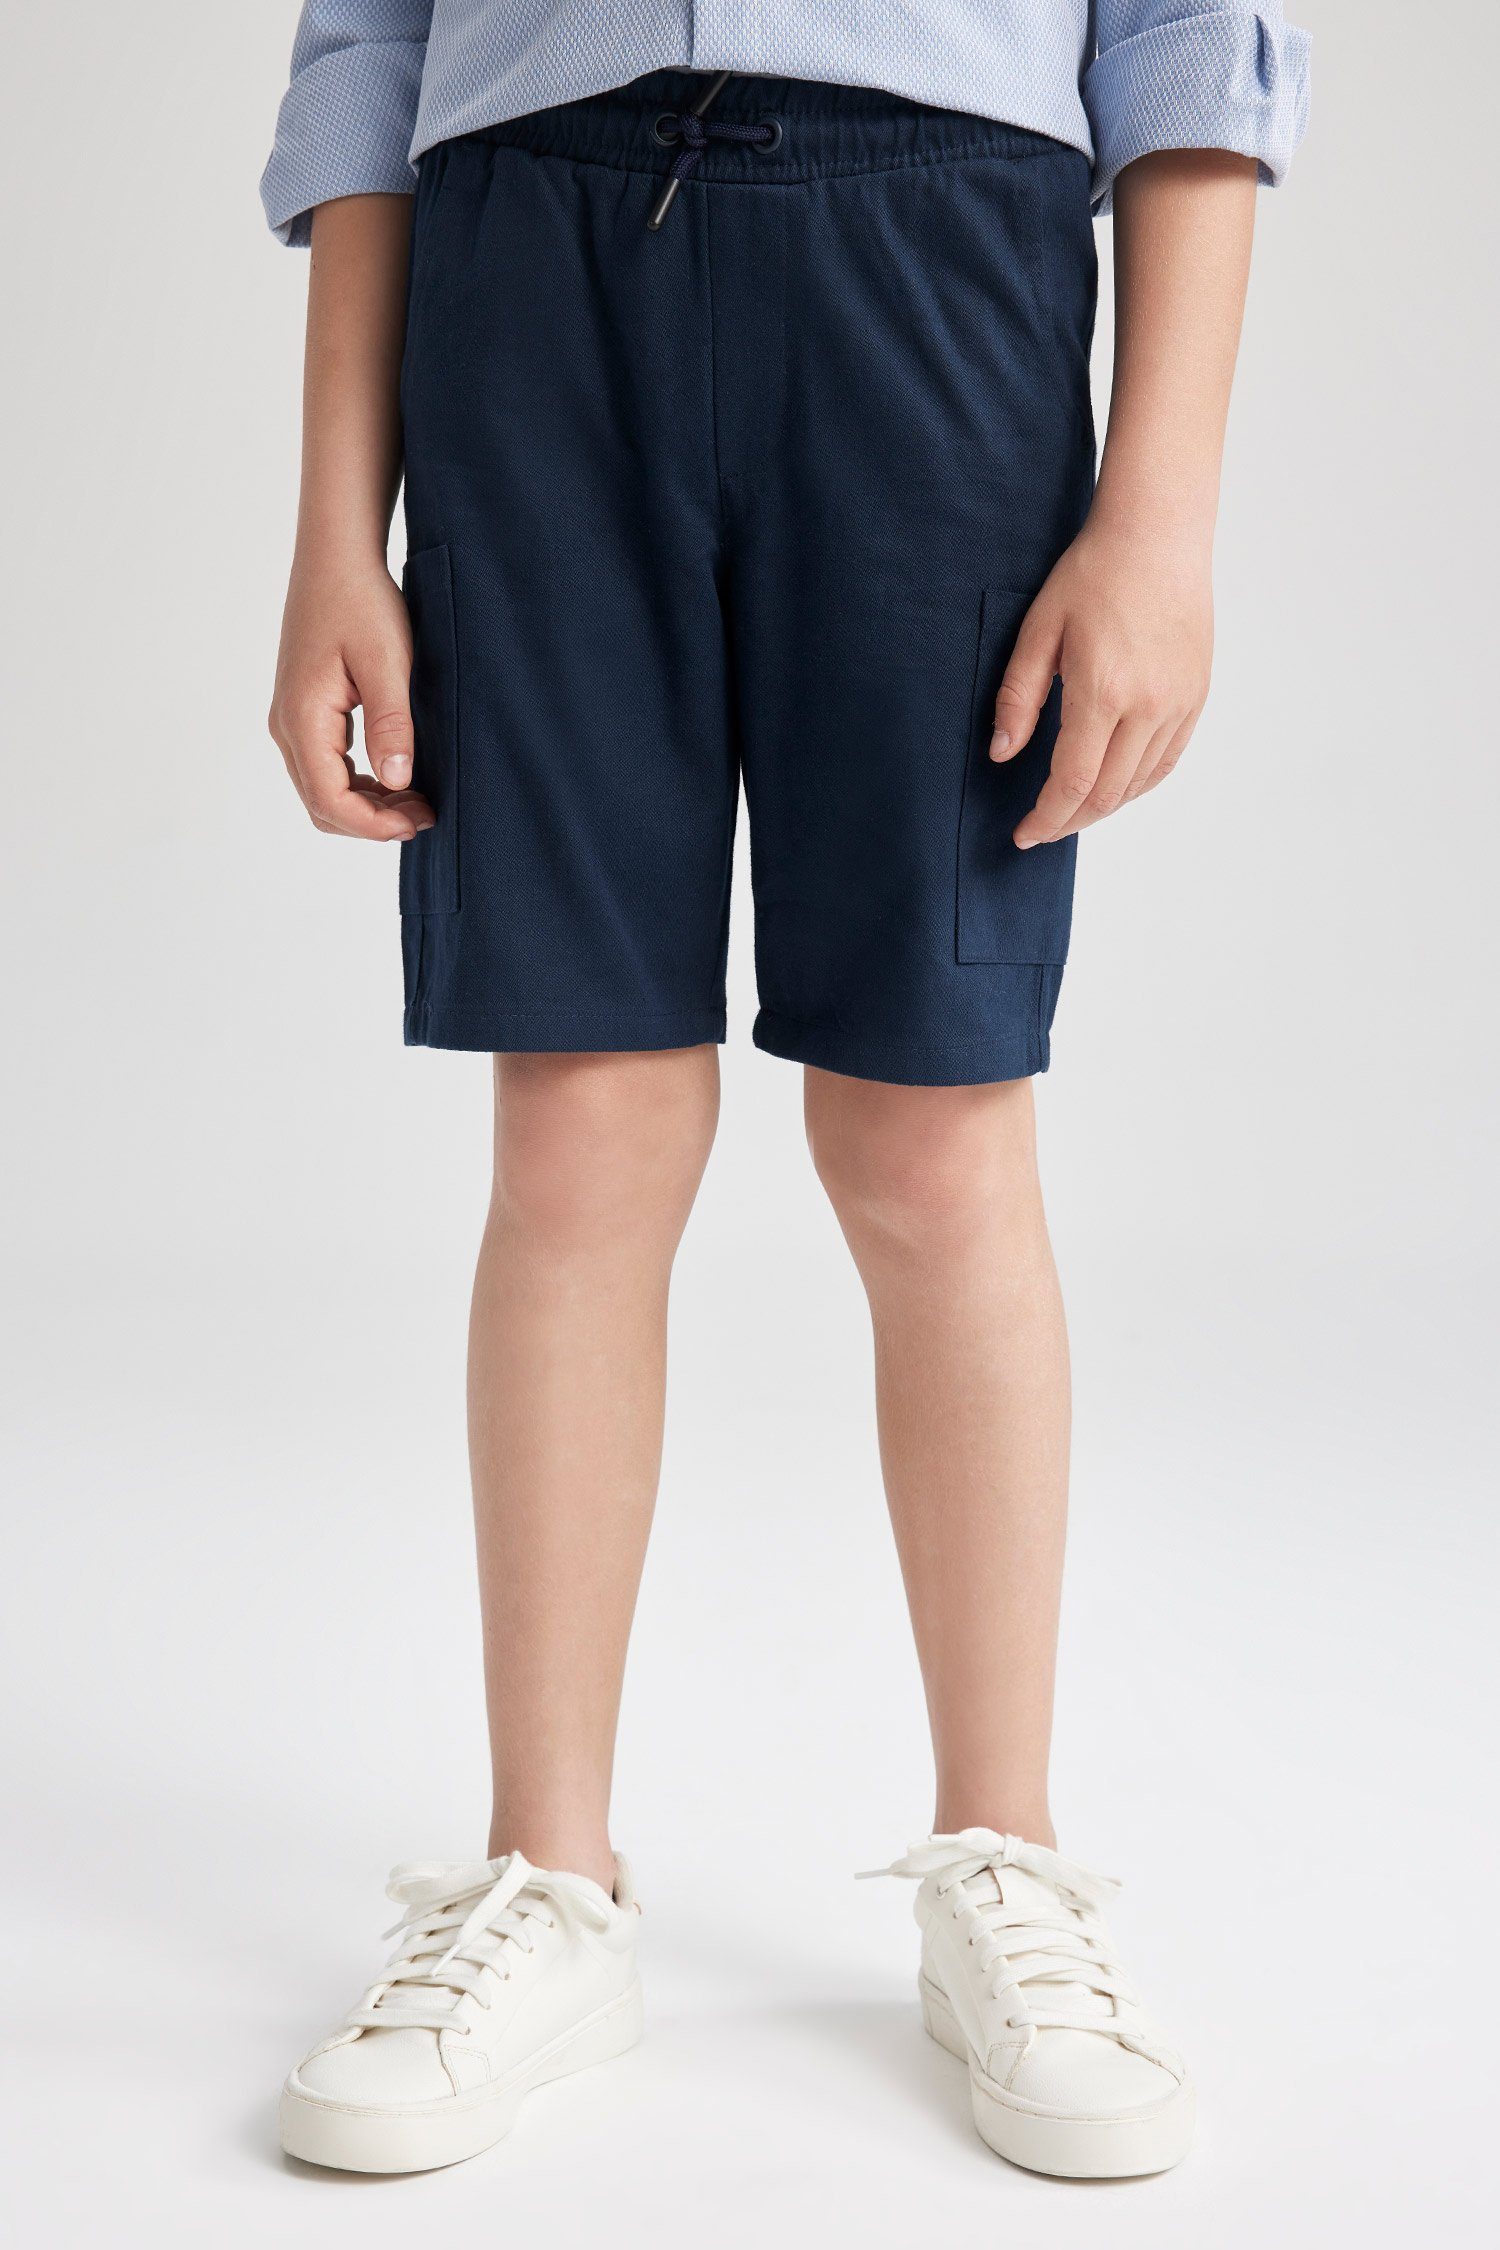 DeFacto Shorts FIT Jungen Marineblau REGULAR Shorts